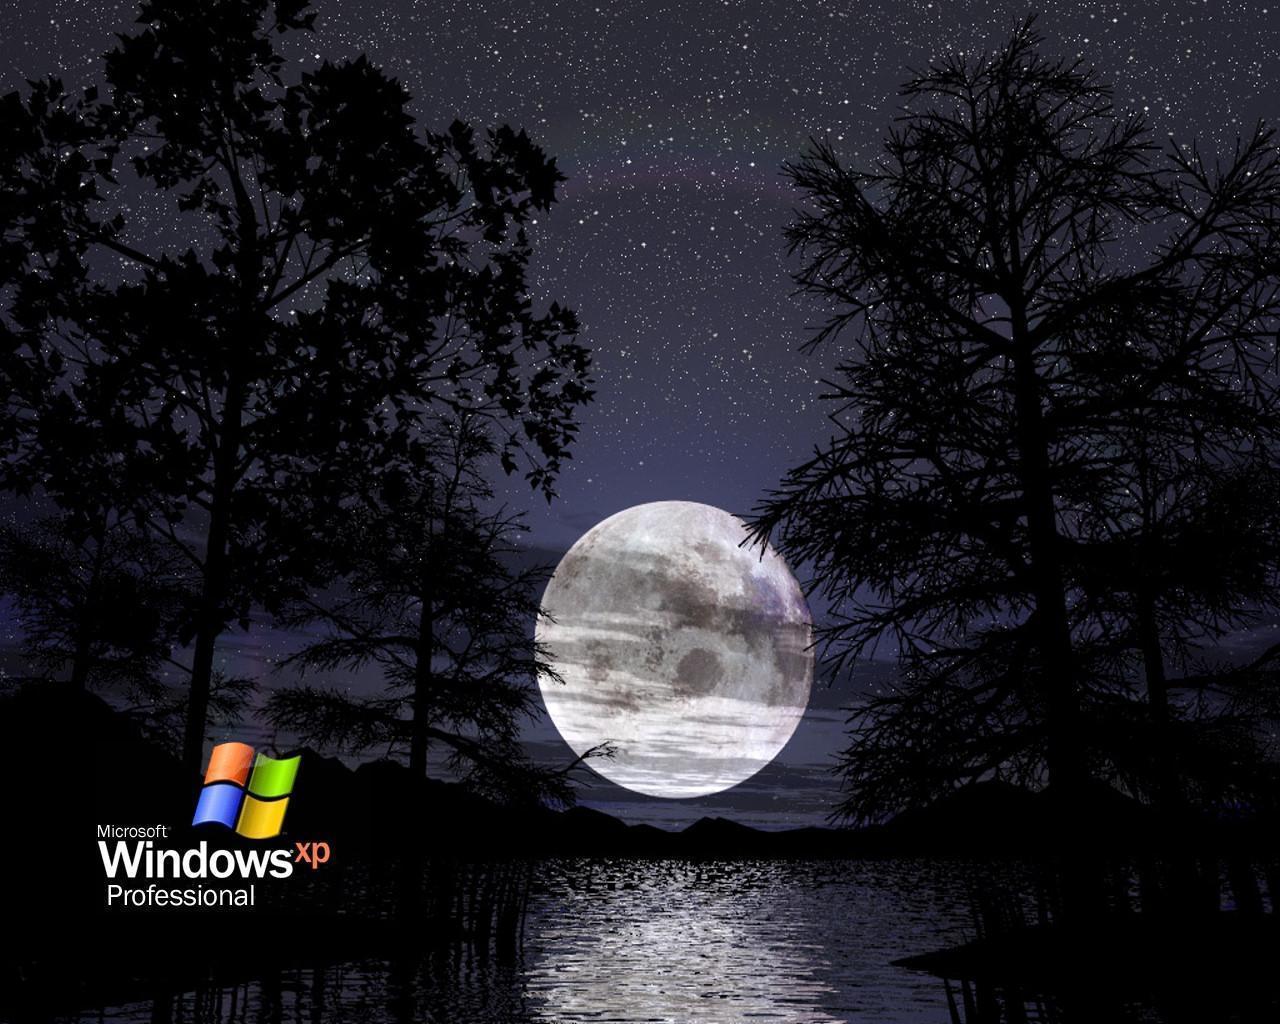 Windows moon free desktop background wallpaper image